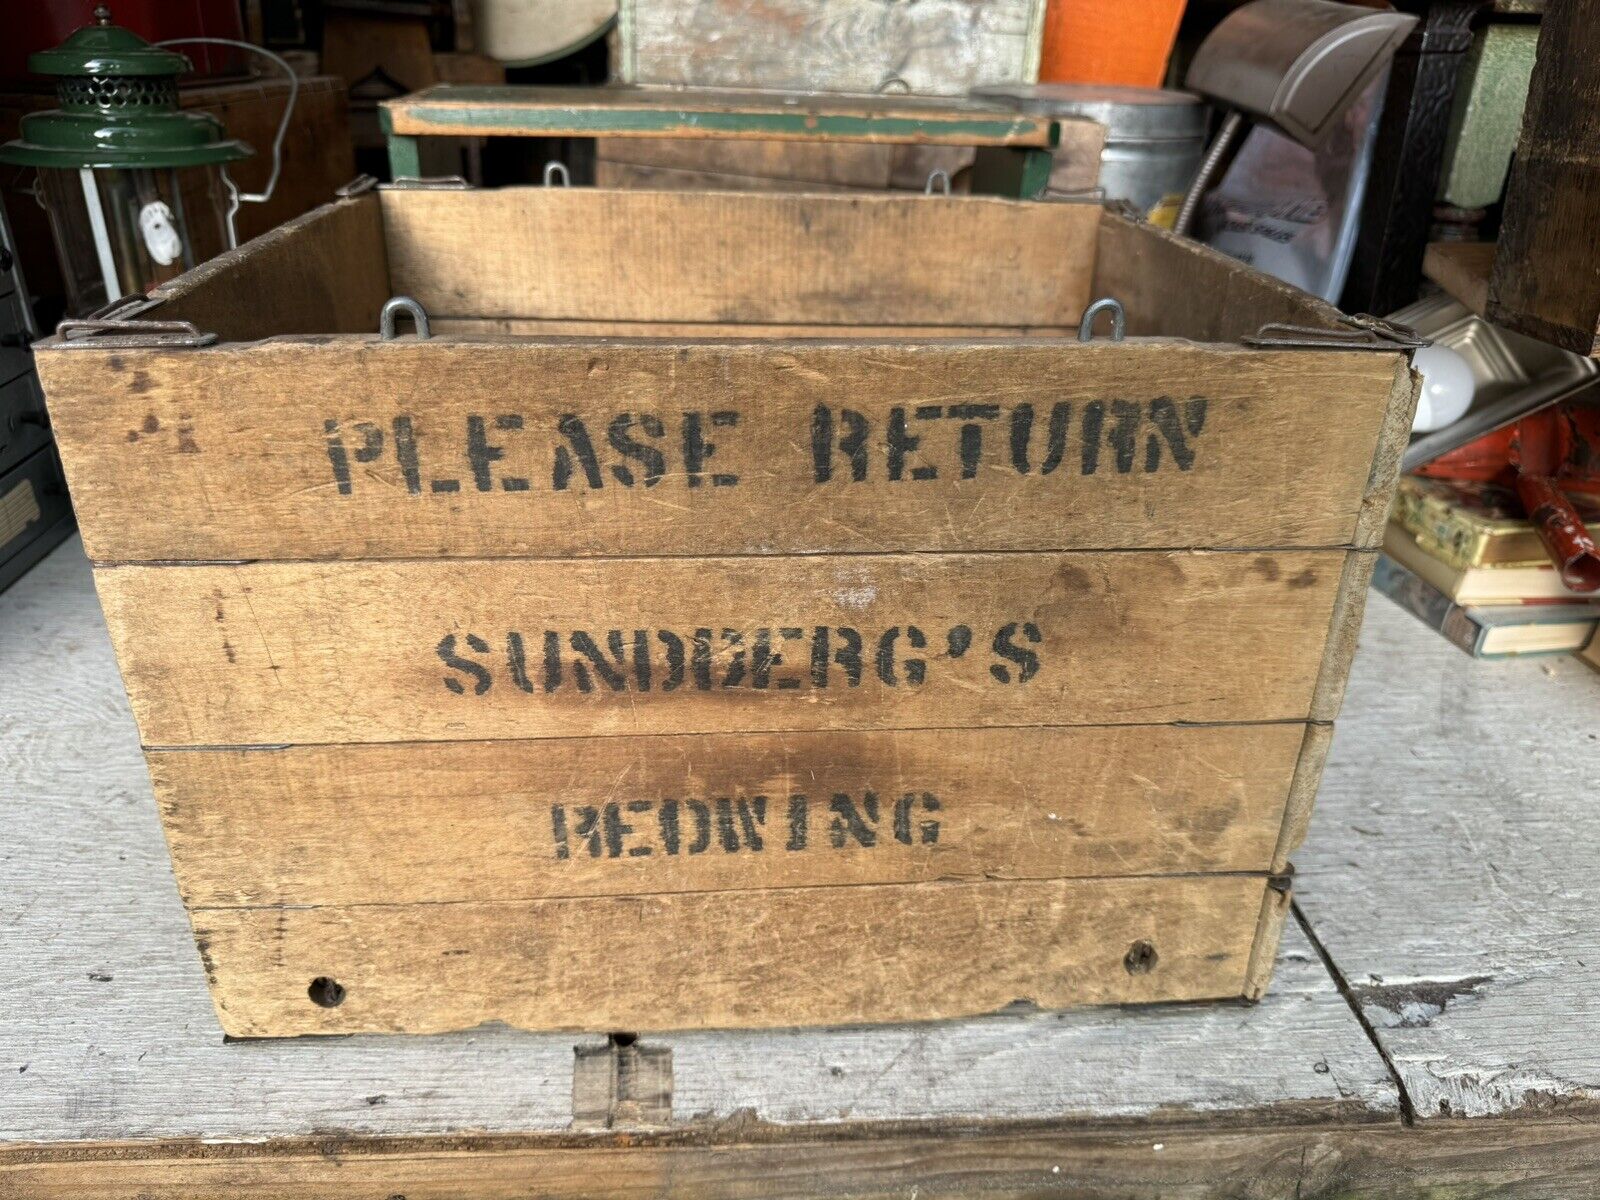 Vintage Wire Sewed Folding Wood Box Sundbergs Redwing Advertising